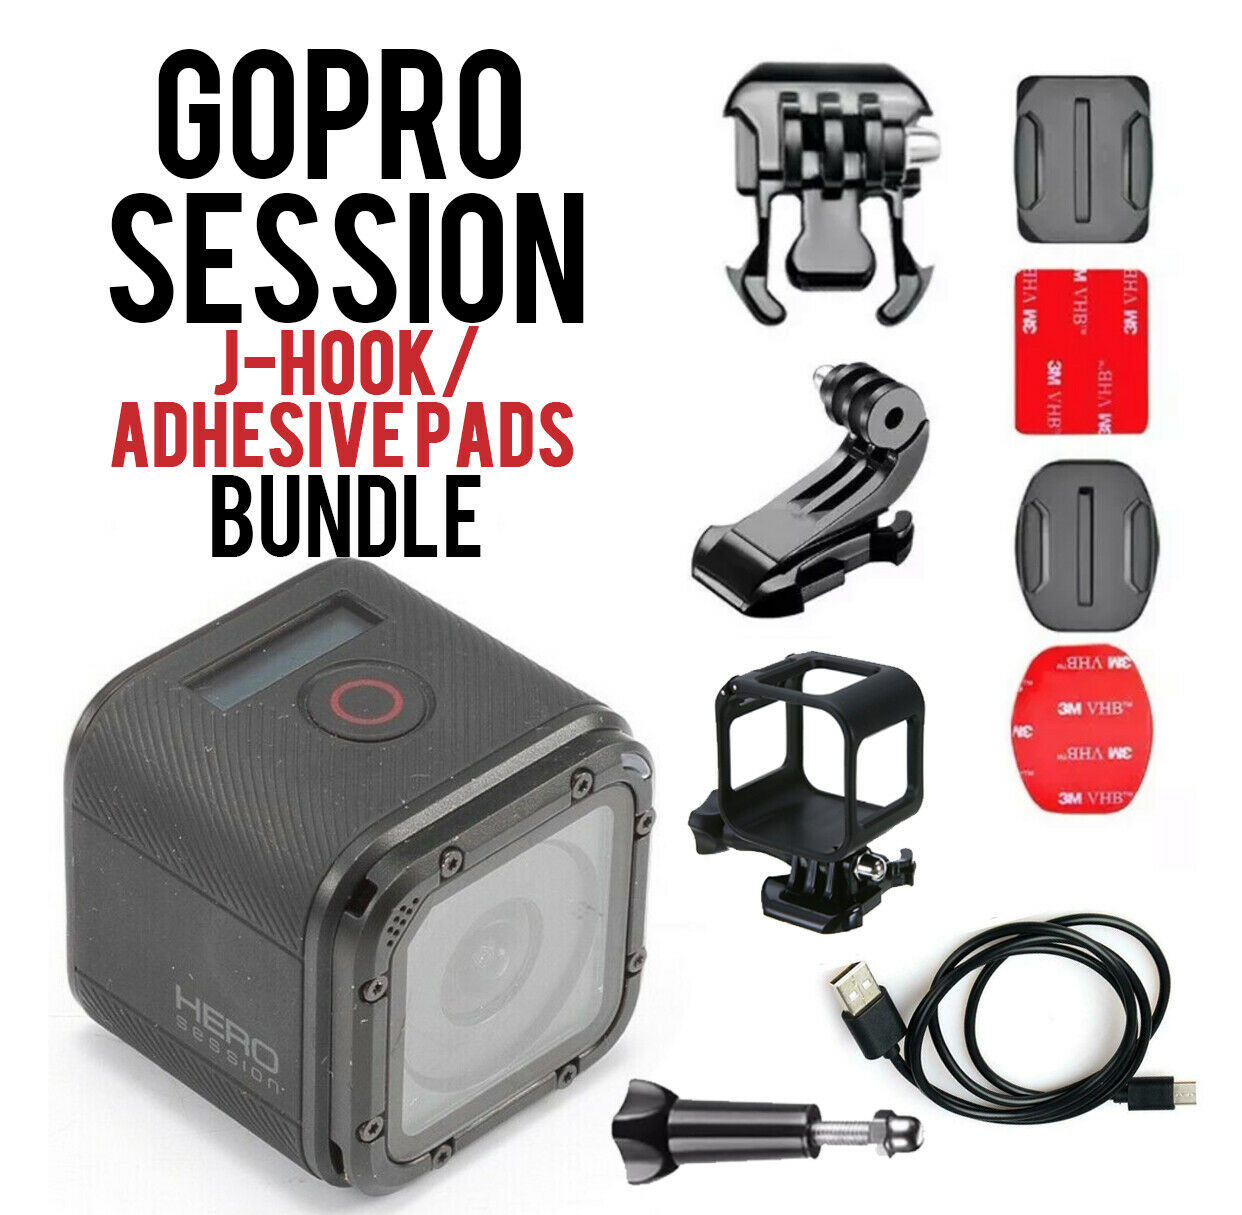 🚨🚨 Refurbished Gopro Hero Session Waterproof Hd Action Camera W/ Bundle